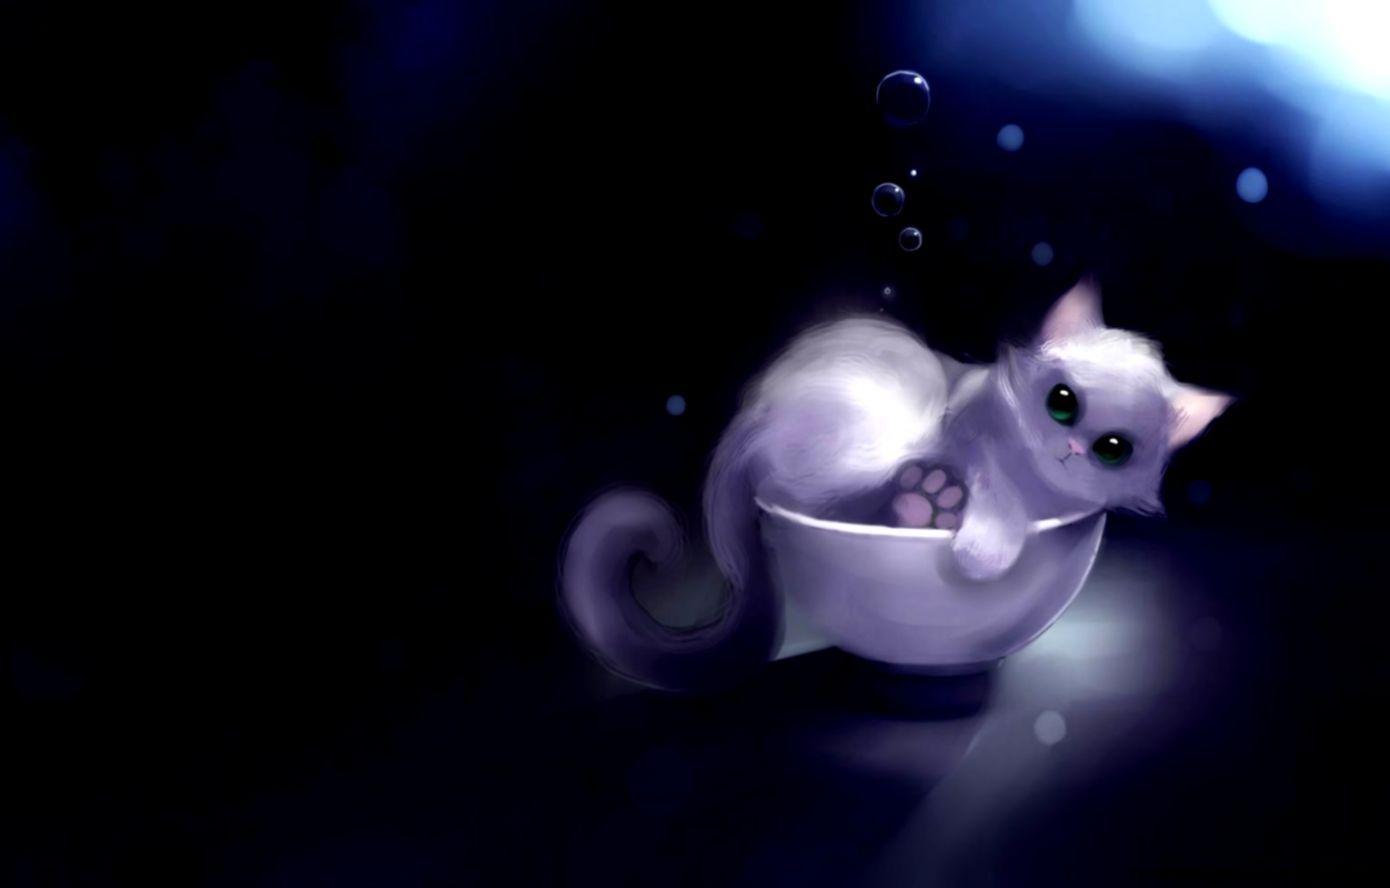 Cute Anime Cat Wallpaper Free Cute Anime Cat Background